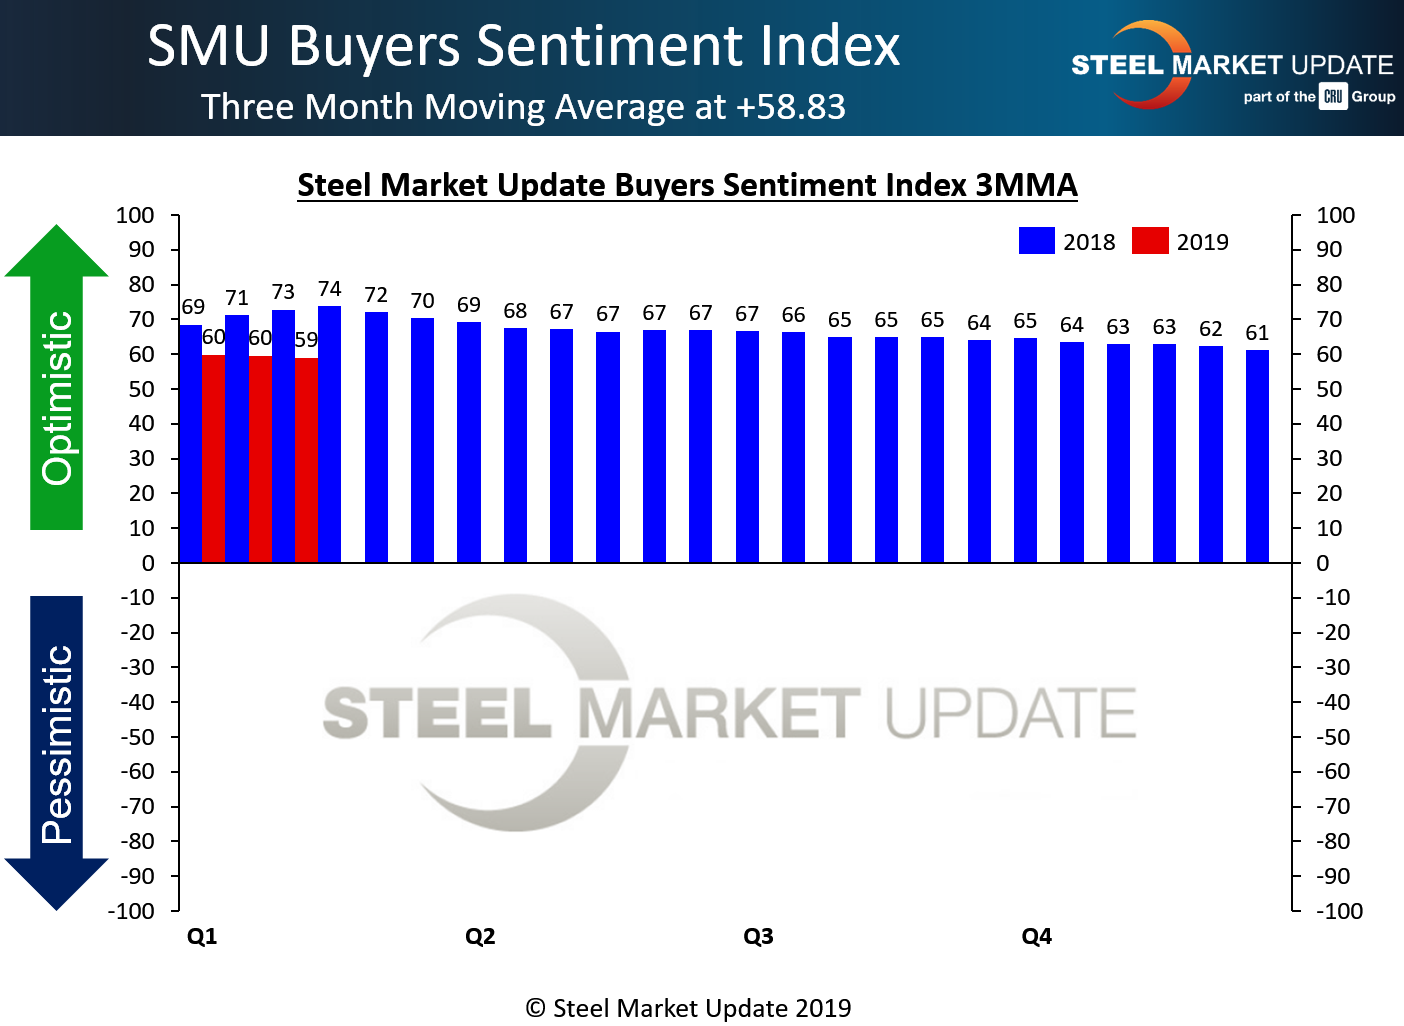 SMU Steel Buyers Sentiment Index